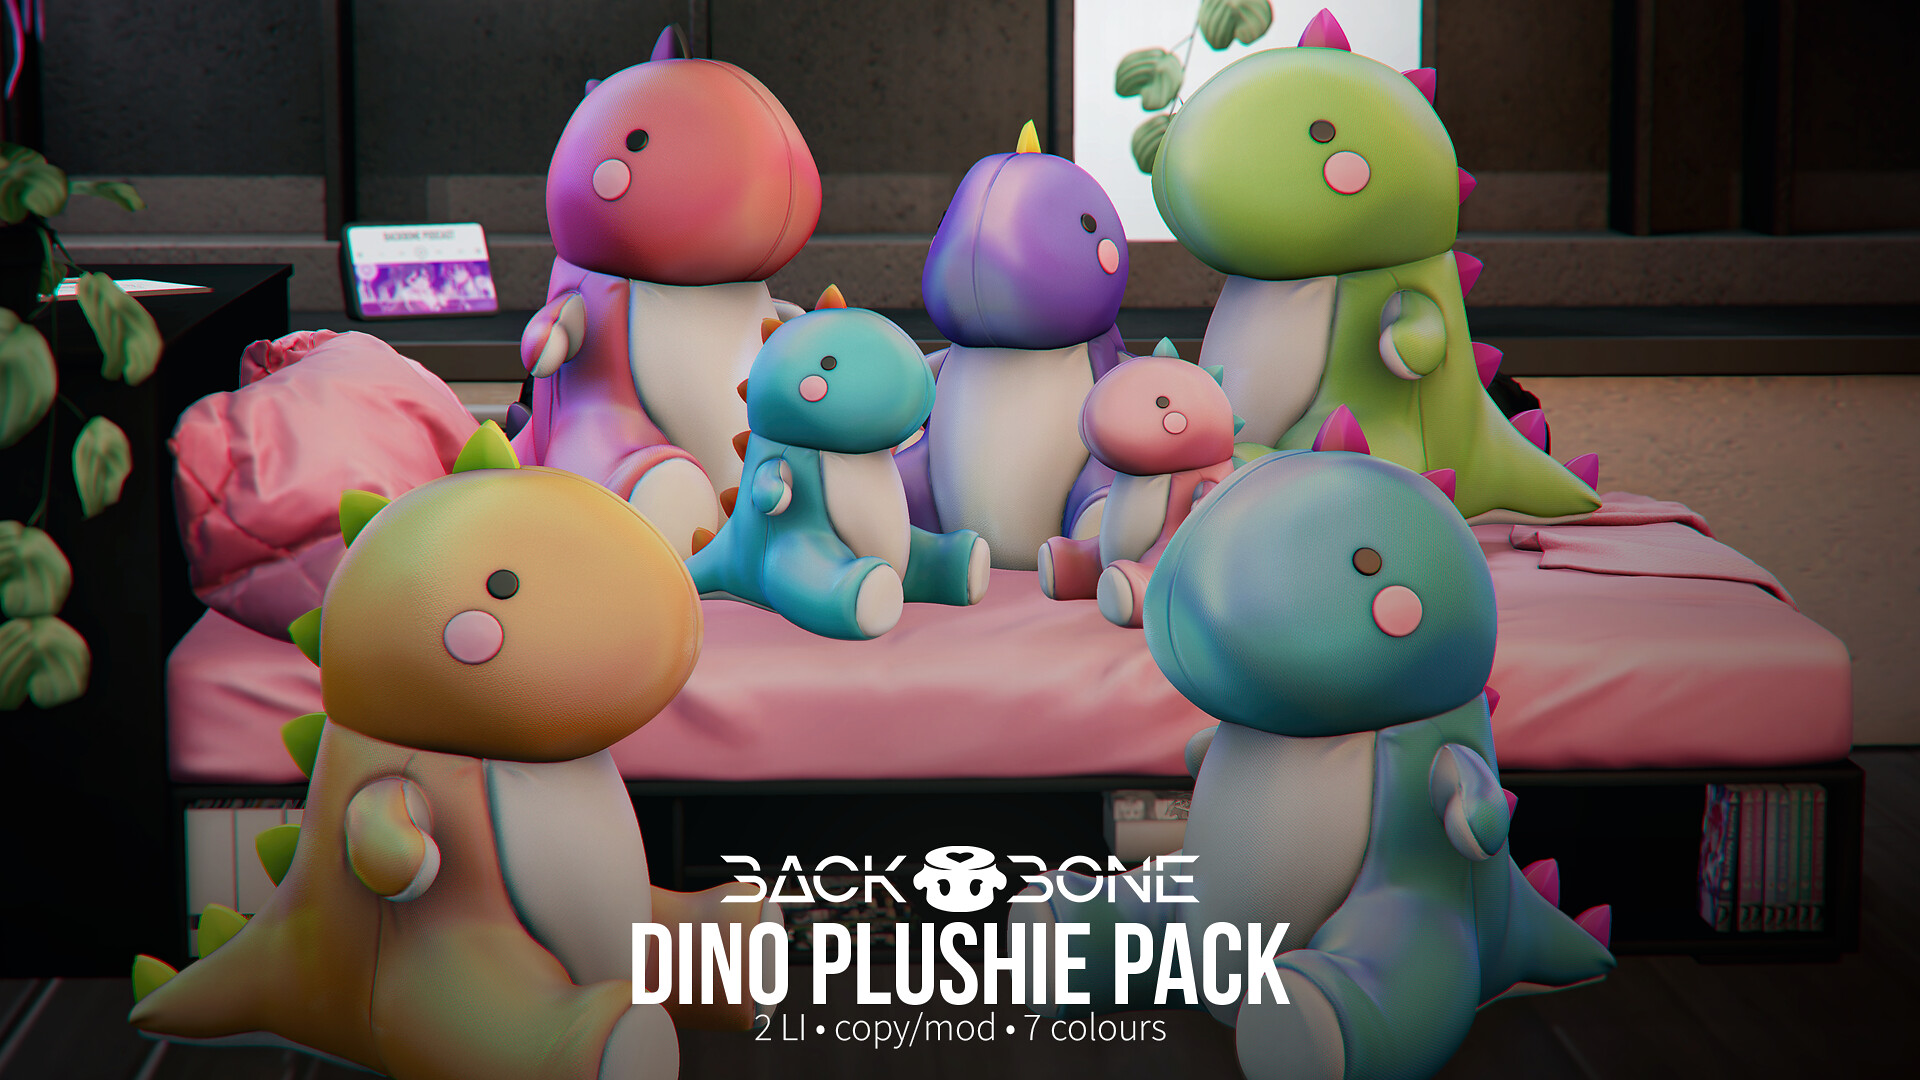 BackBone – Dino Plushie Pack